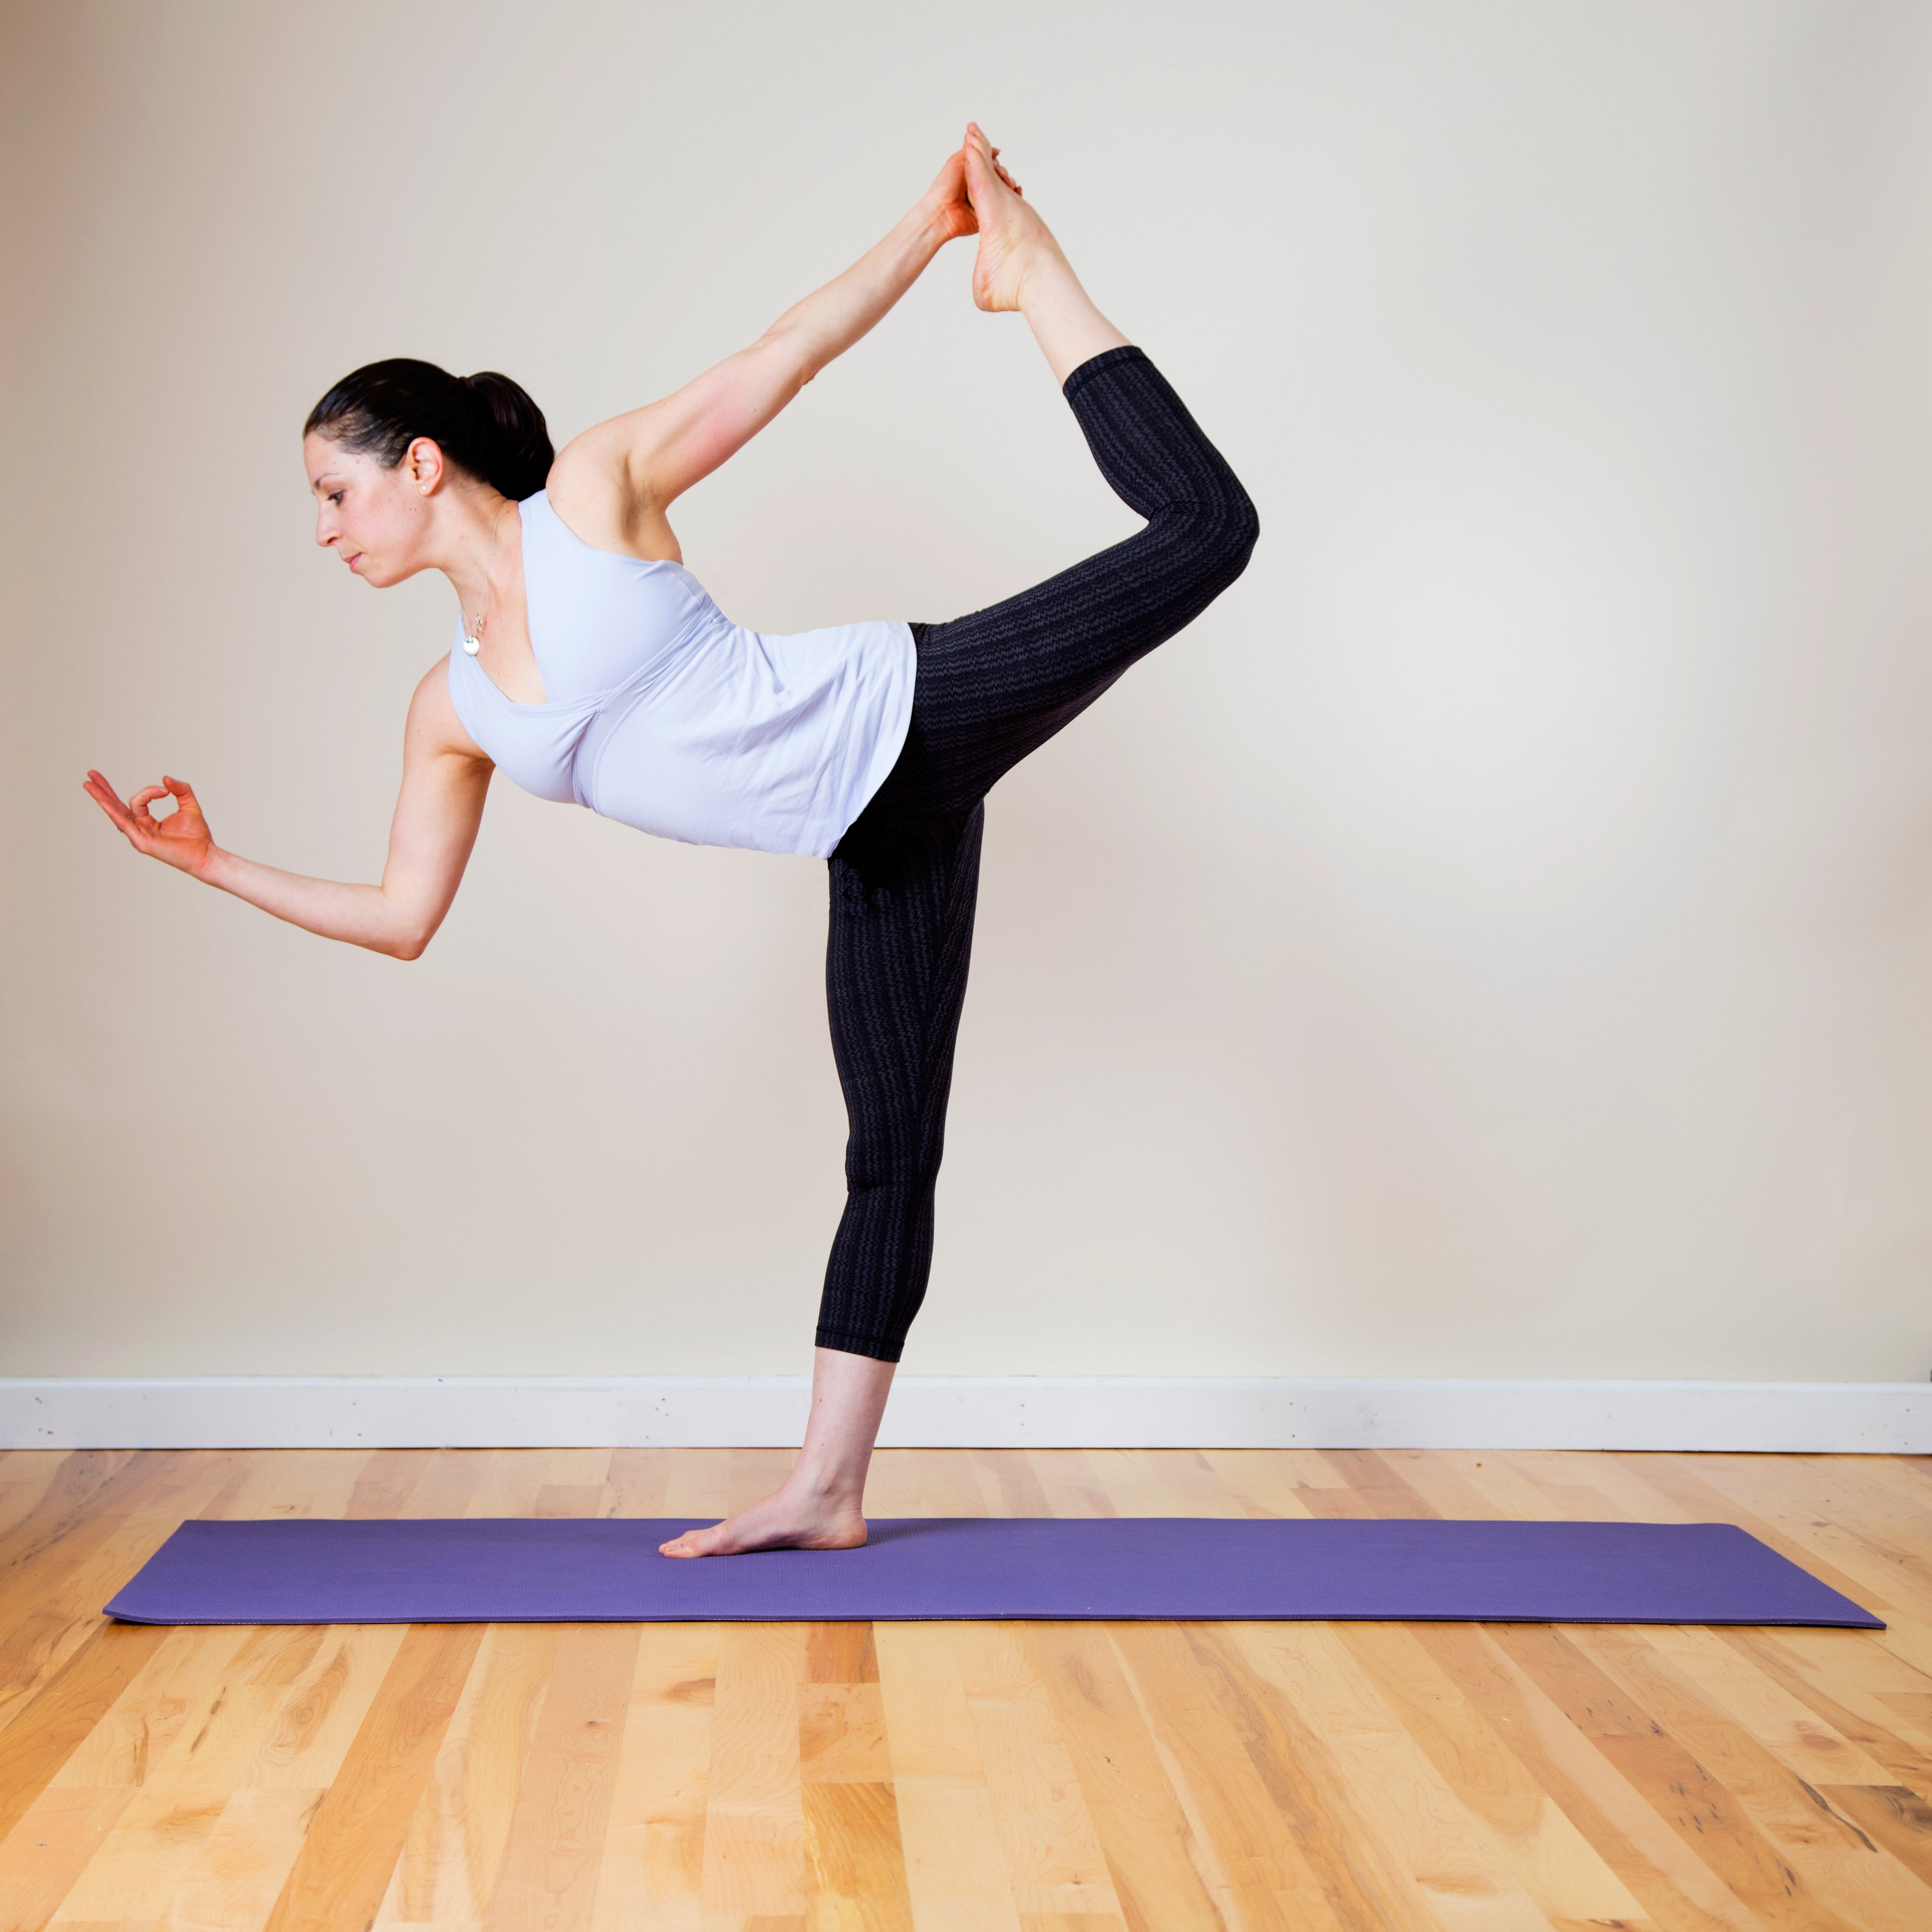 10 Yoga Poses and Exercises for Balance Training - DoYou